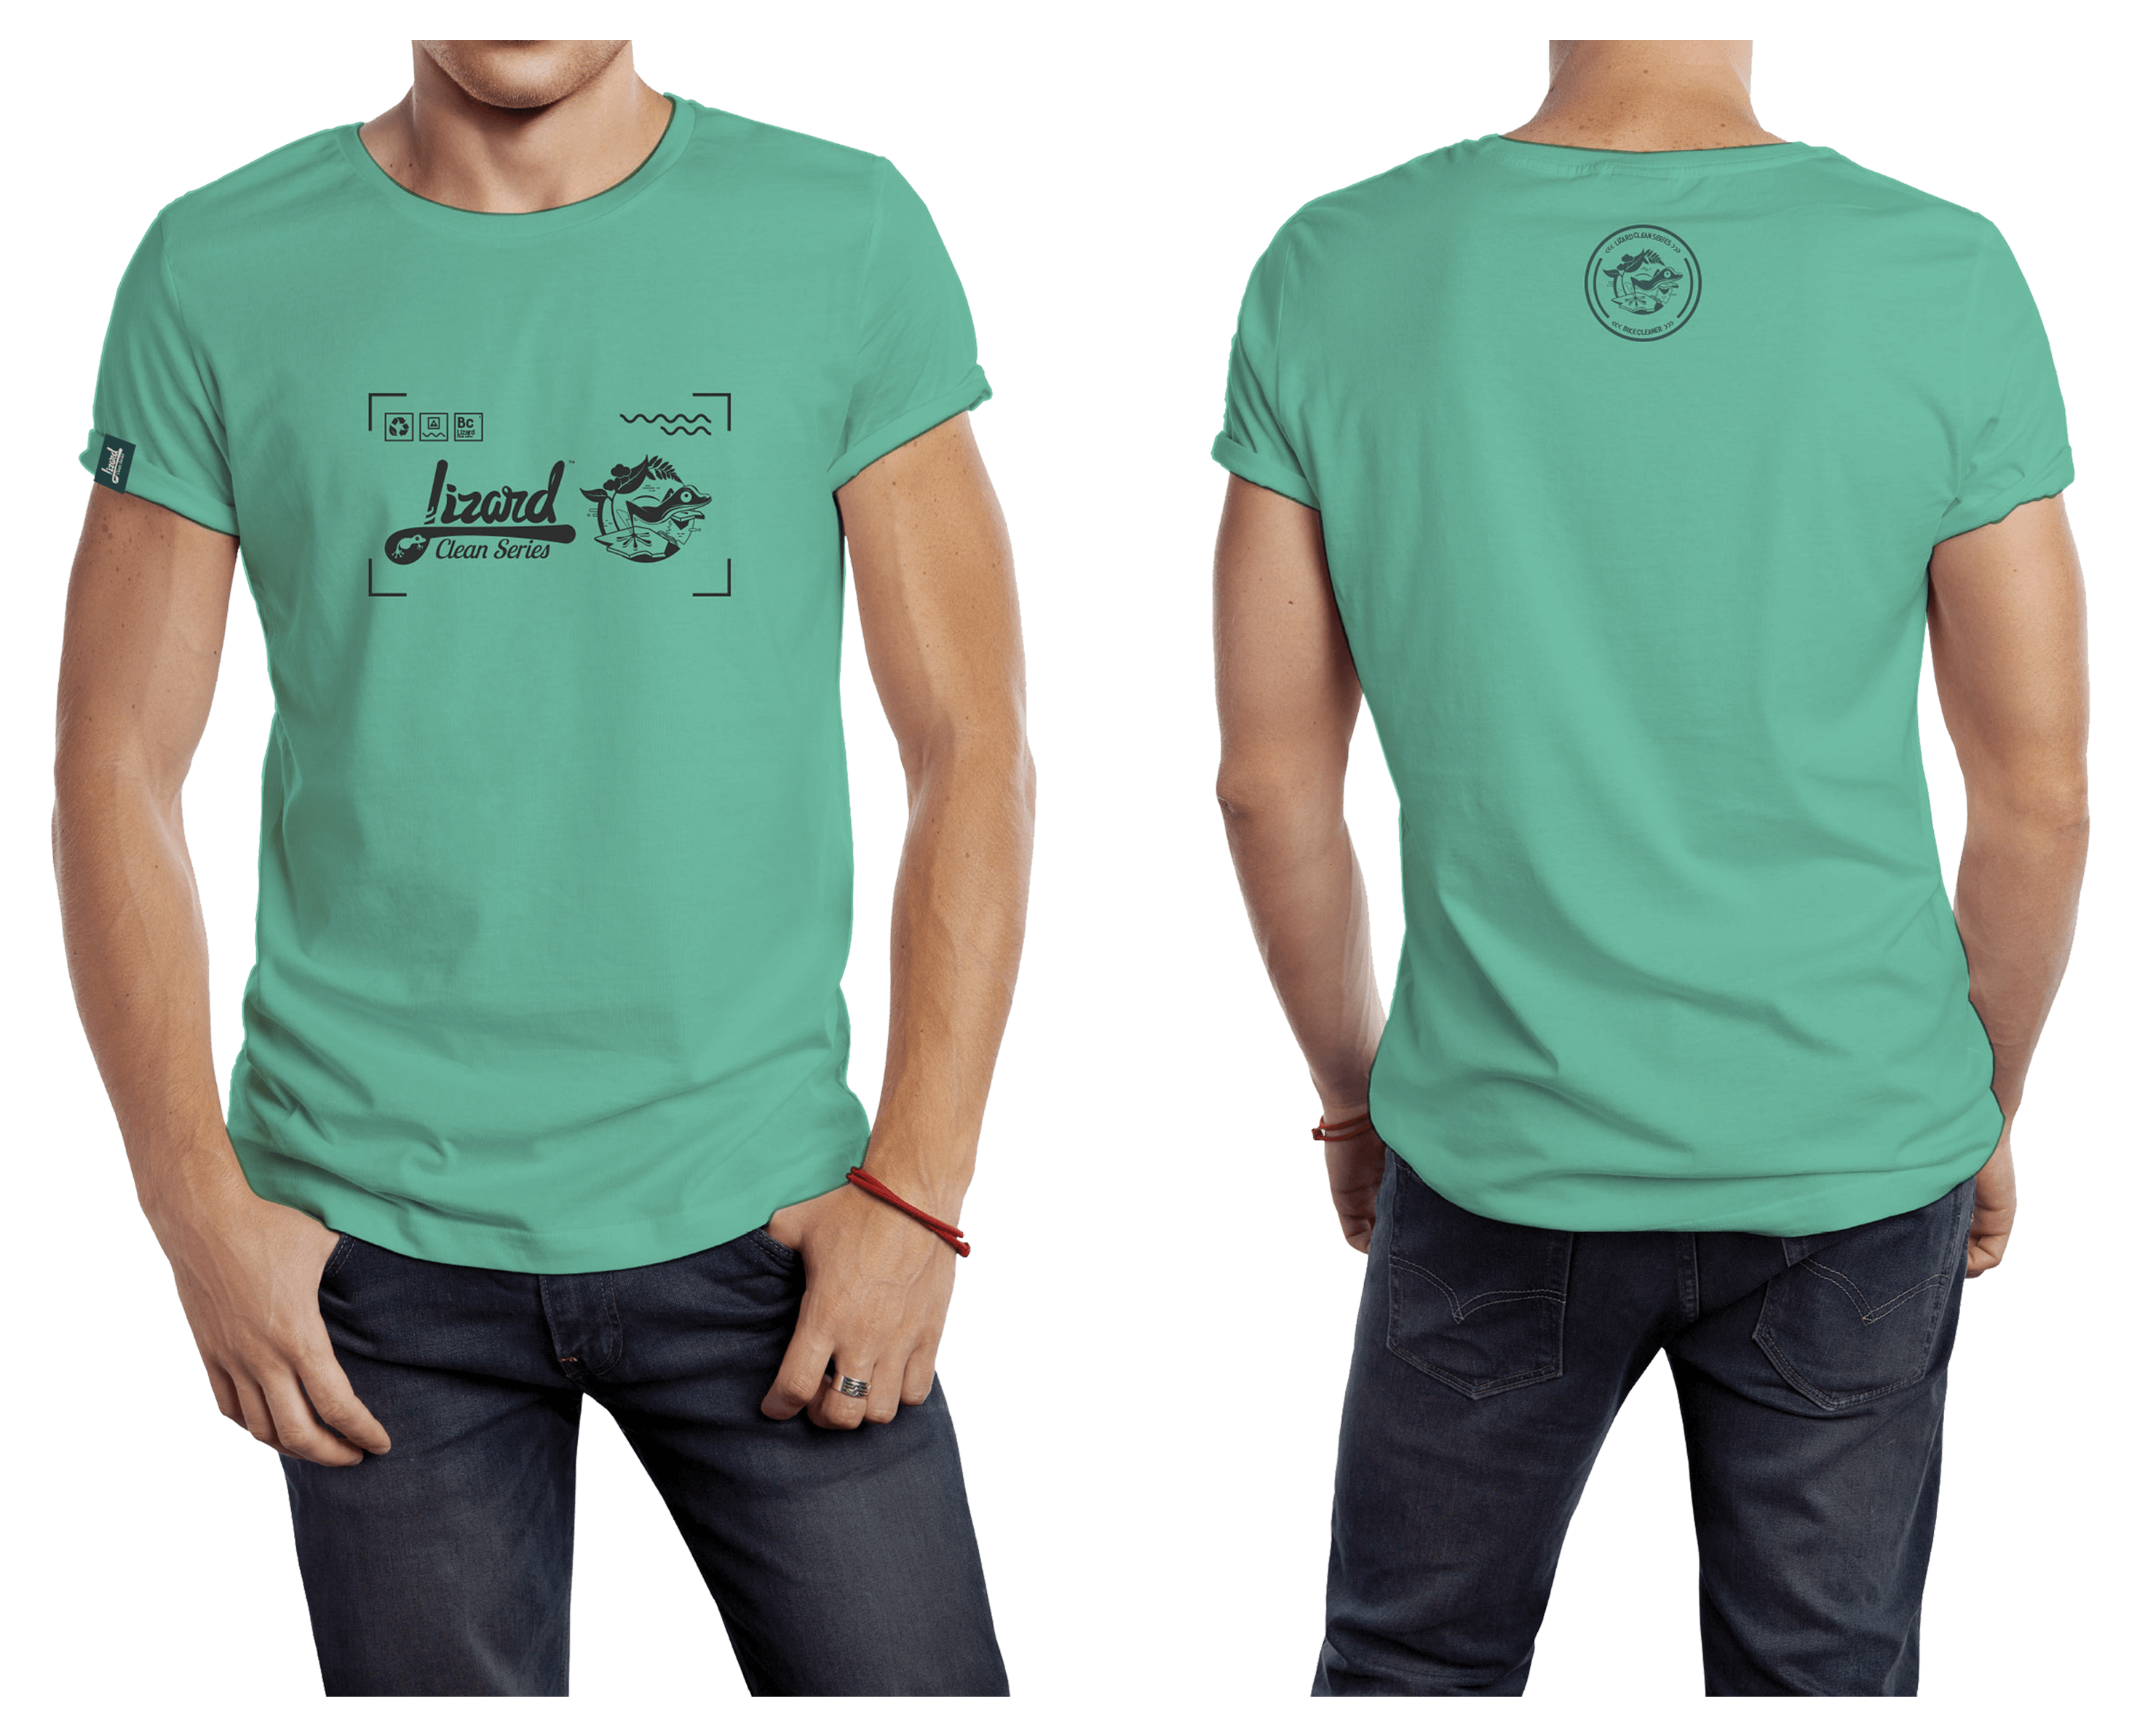 Camiseta Verde Para Hombre - Compra Online Camiseta Verde Para Hombre en